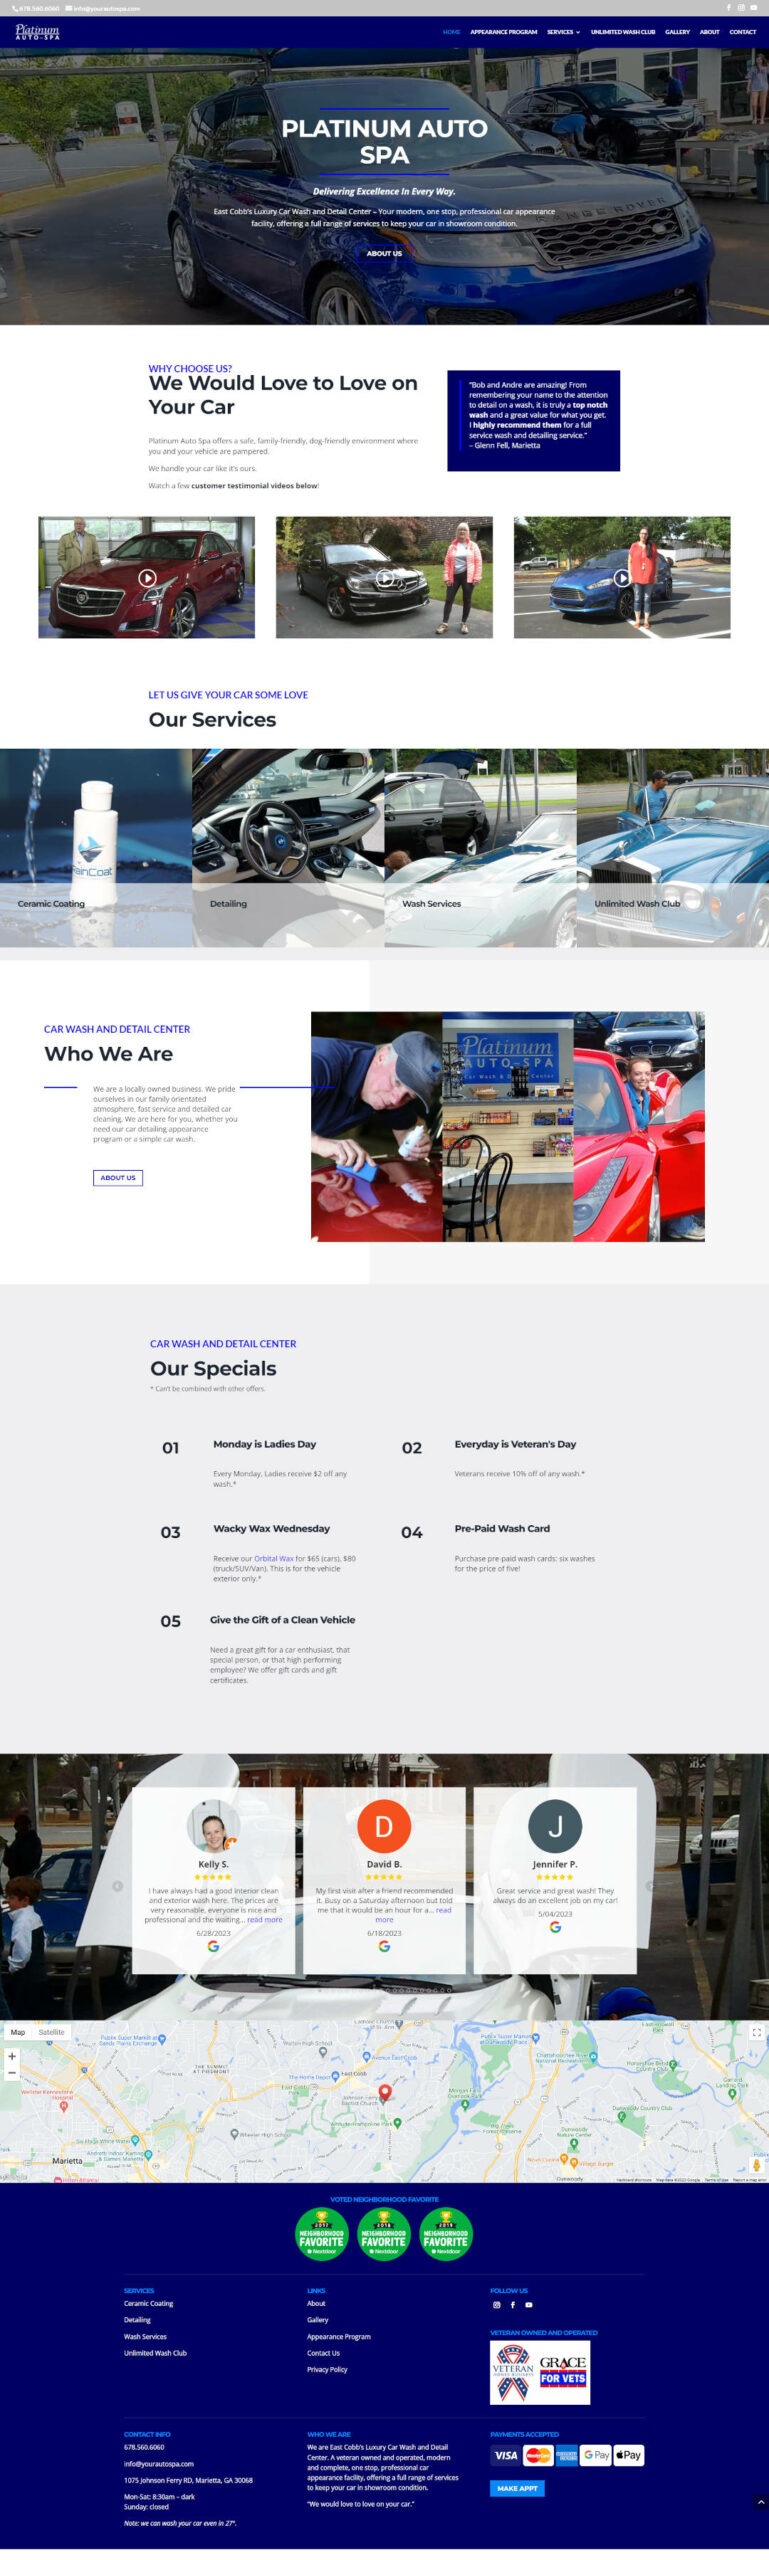 Mythos Media Business Websites - Platinum Auto Spa in East Cobb Marietta Johnson Ferry Road, screenshot